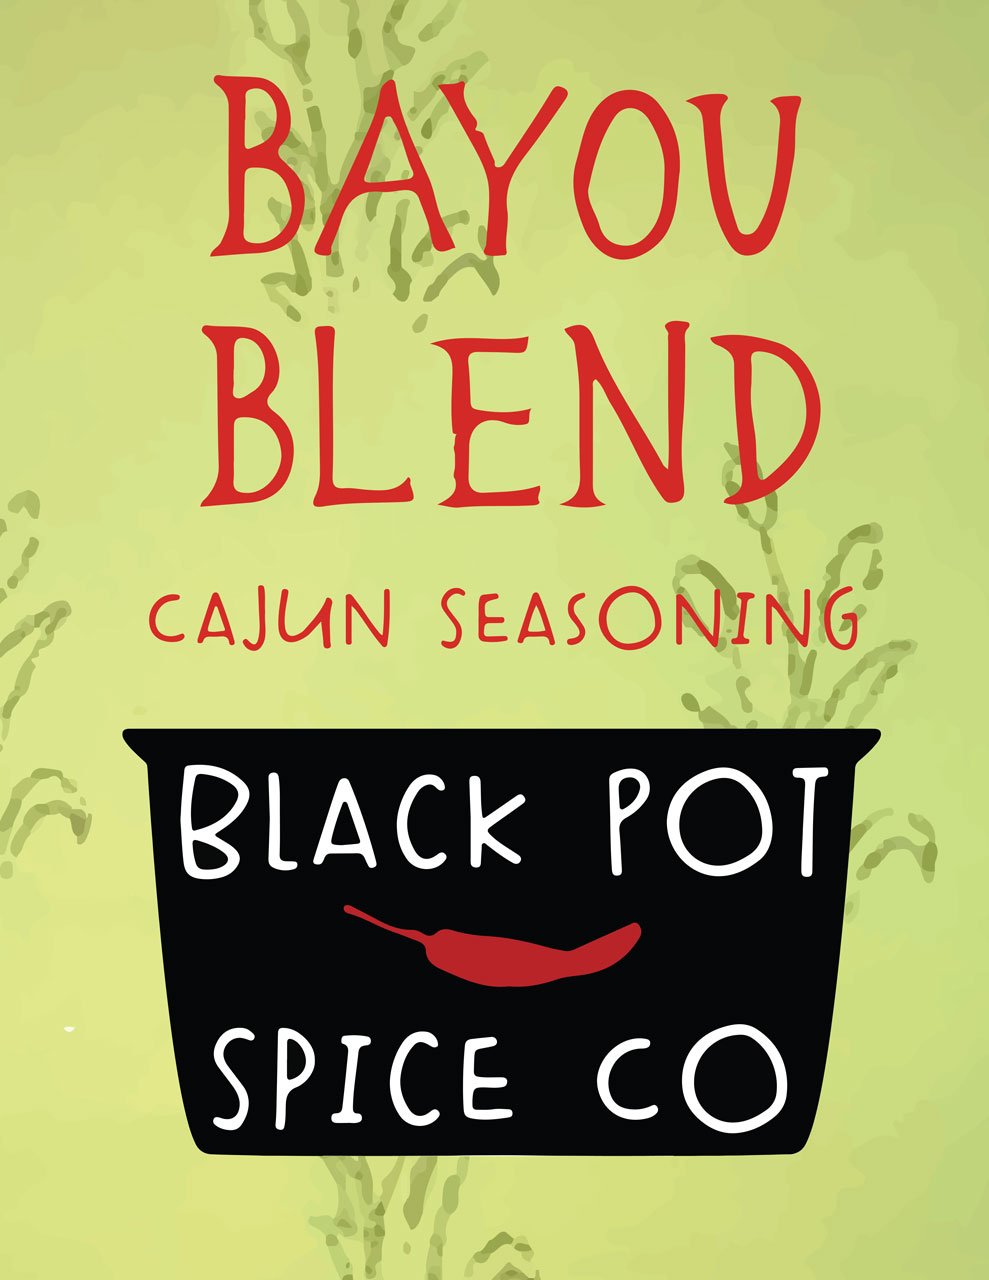 Black Pot Spice Co.- Bayou Blend see